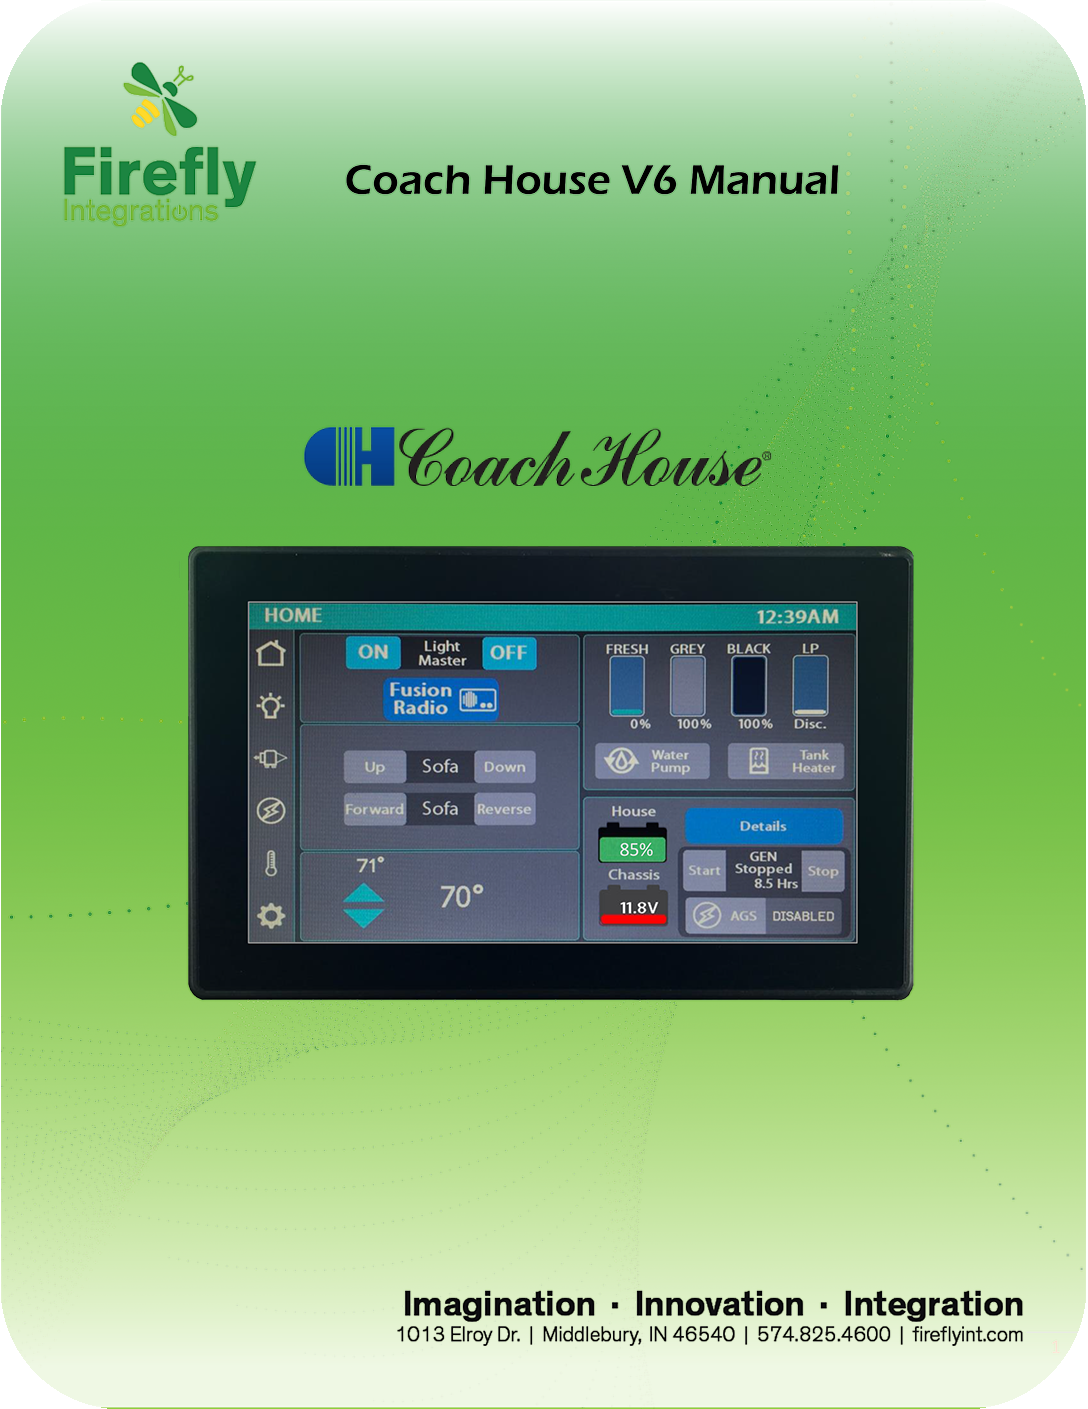 Firefly Manual V6